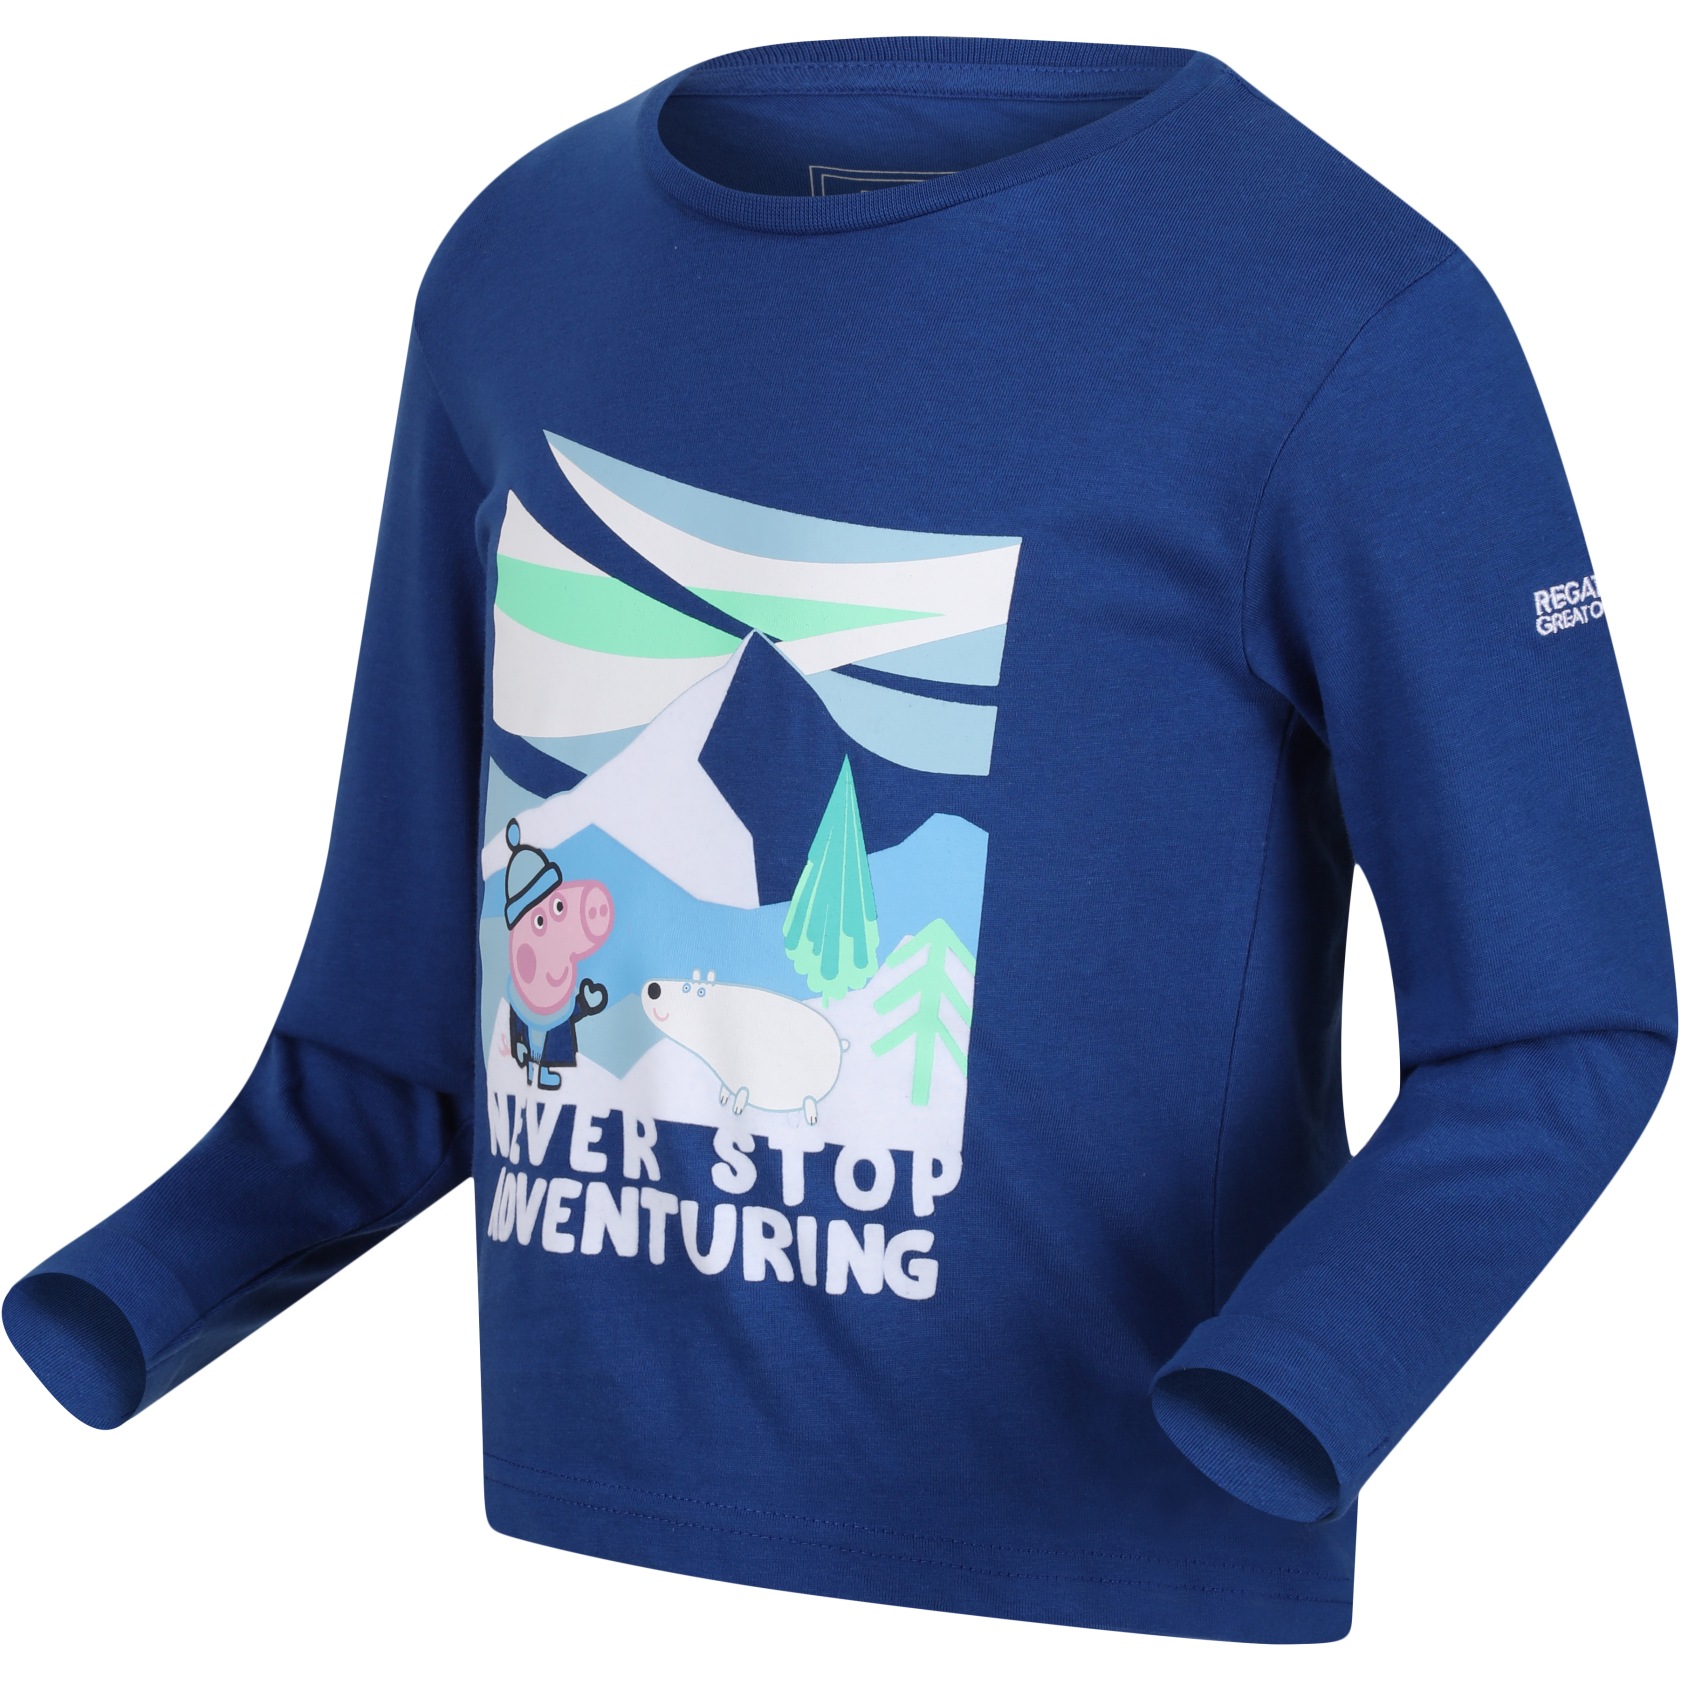 Picture of Regatta Peppa Graphic Longsleeve Shirt Kids - Space Blue B45